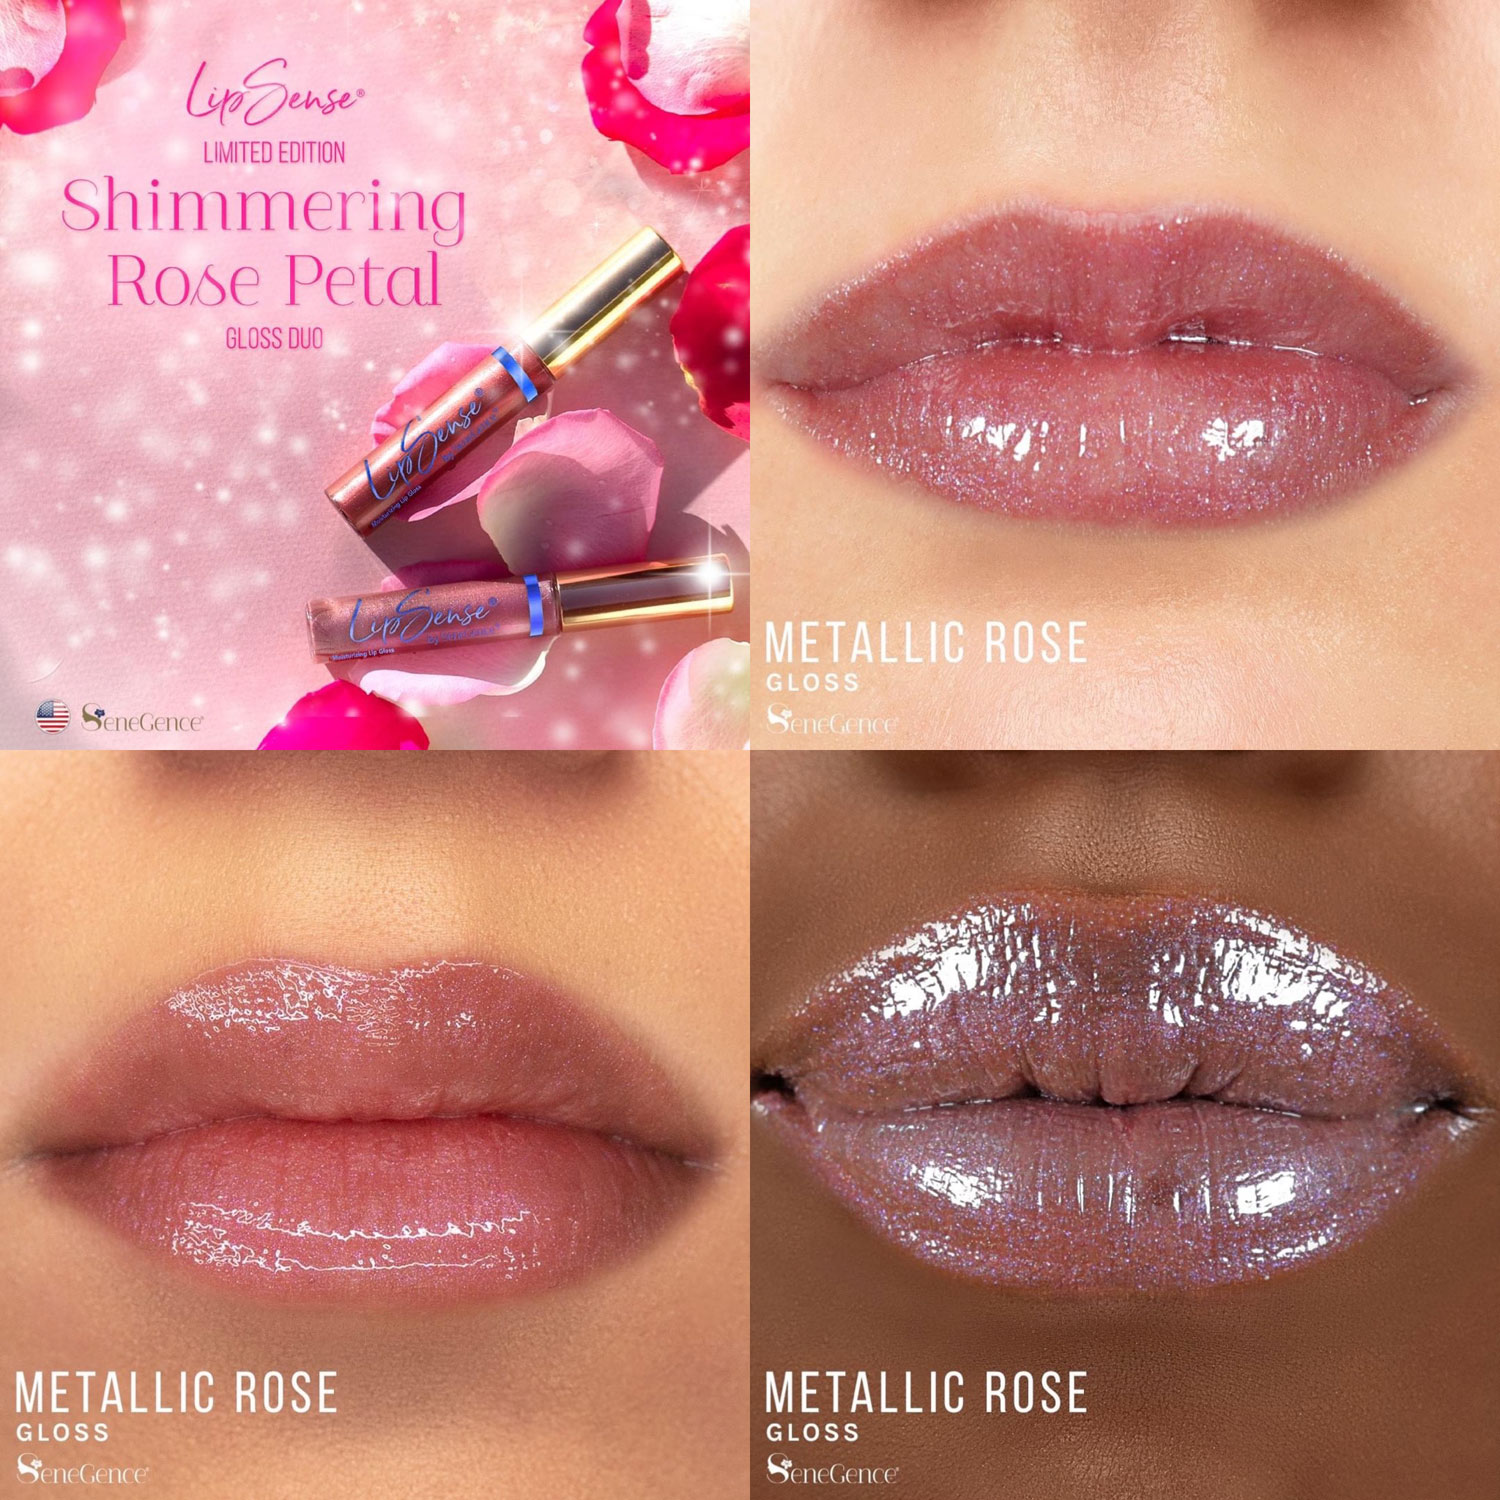 Lipsense Shimmering Rose Petal Gloss Duo Limited Edition